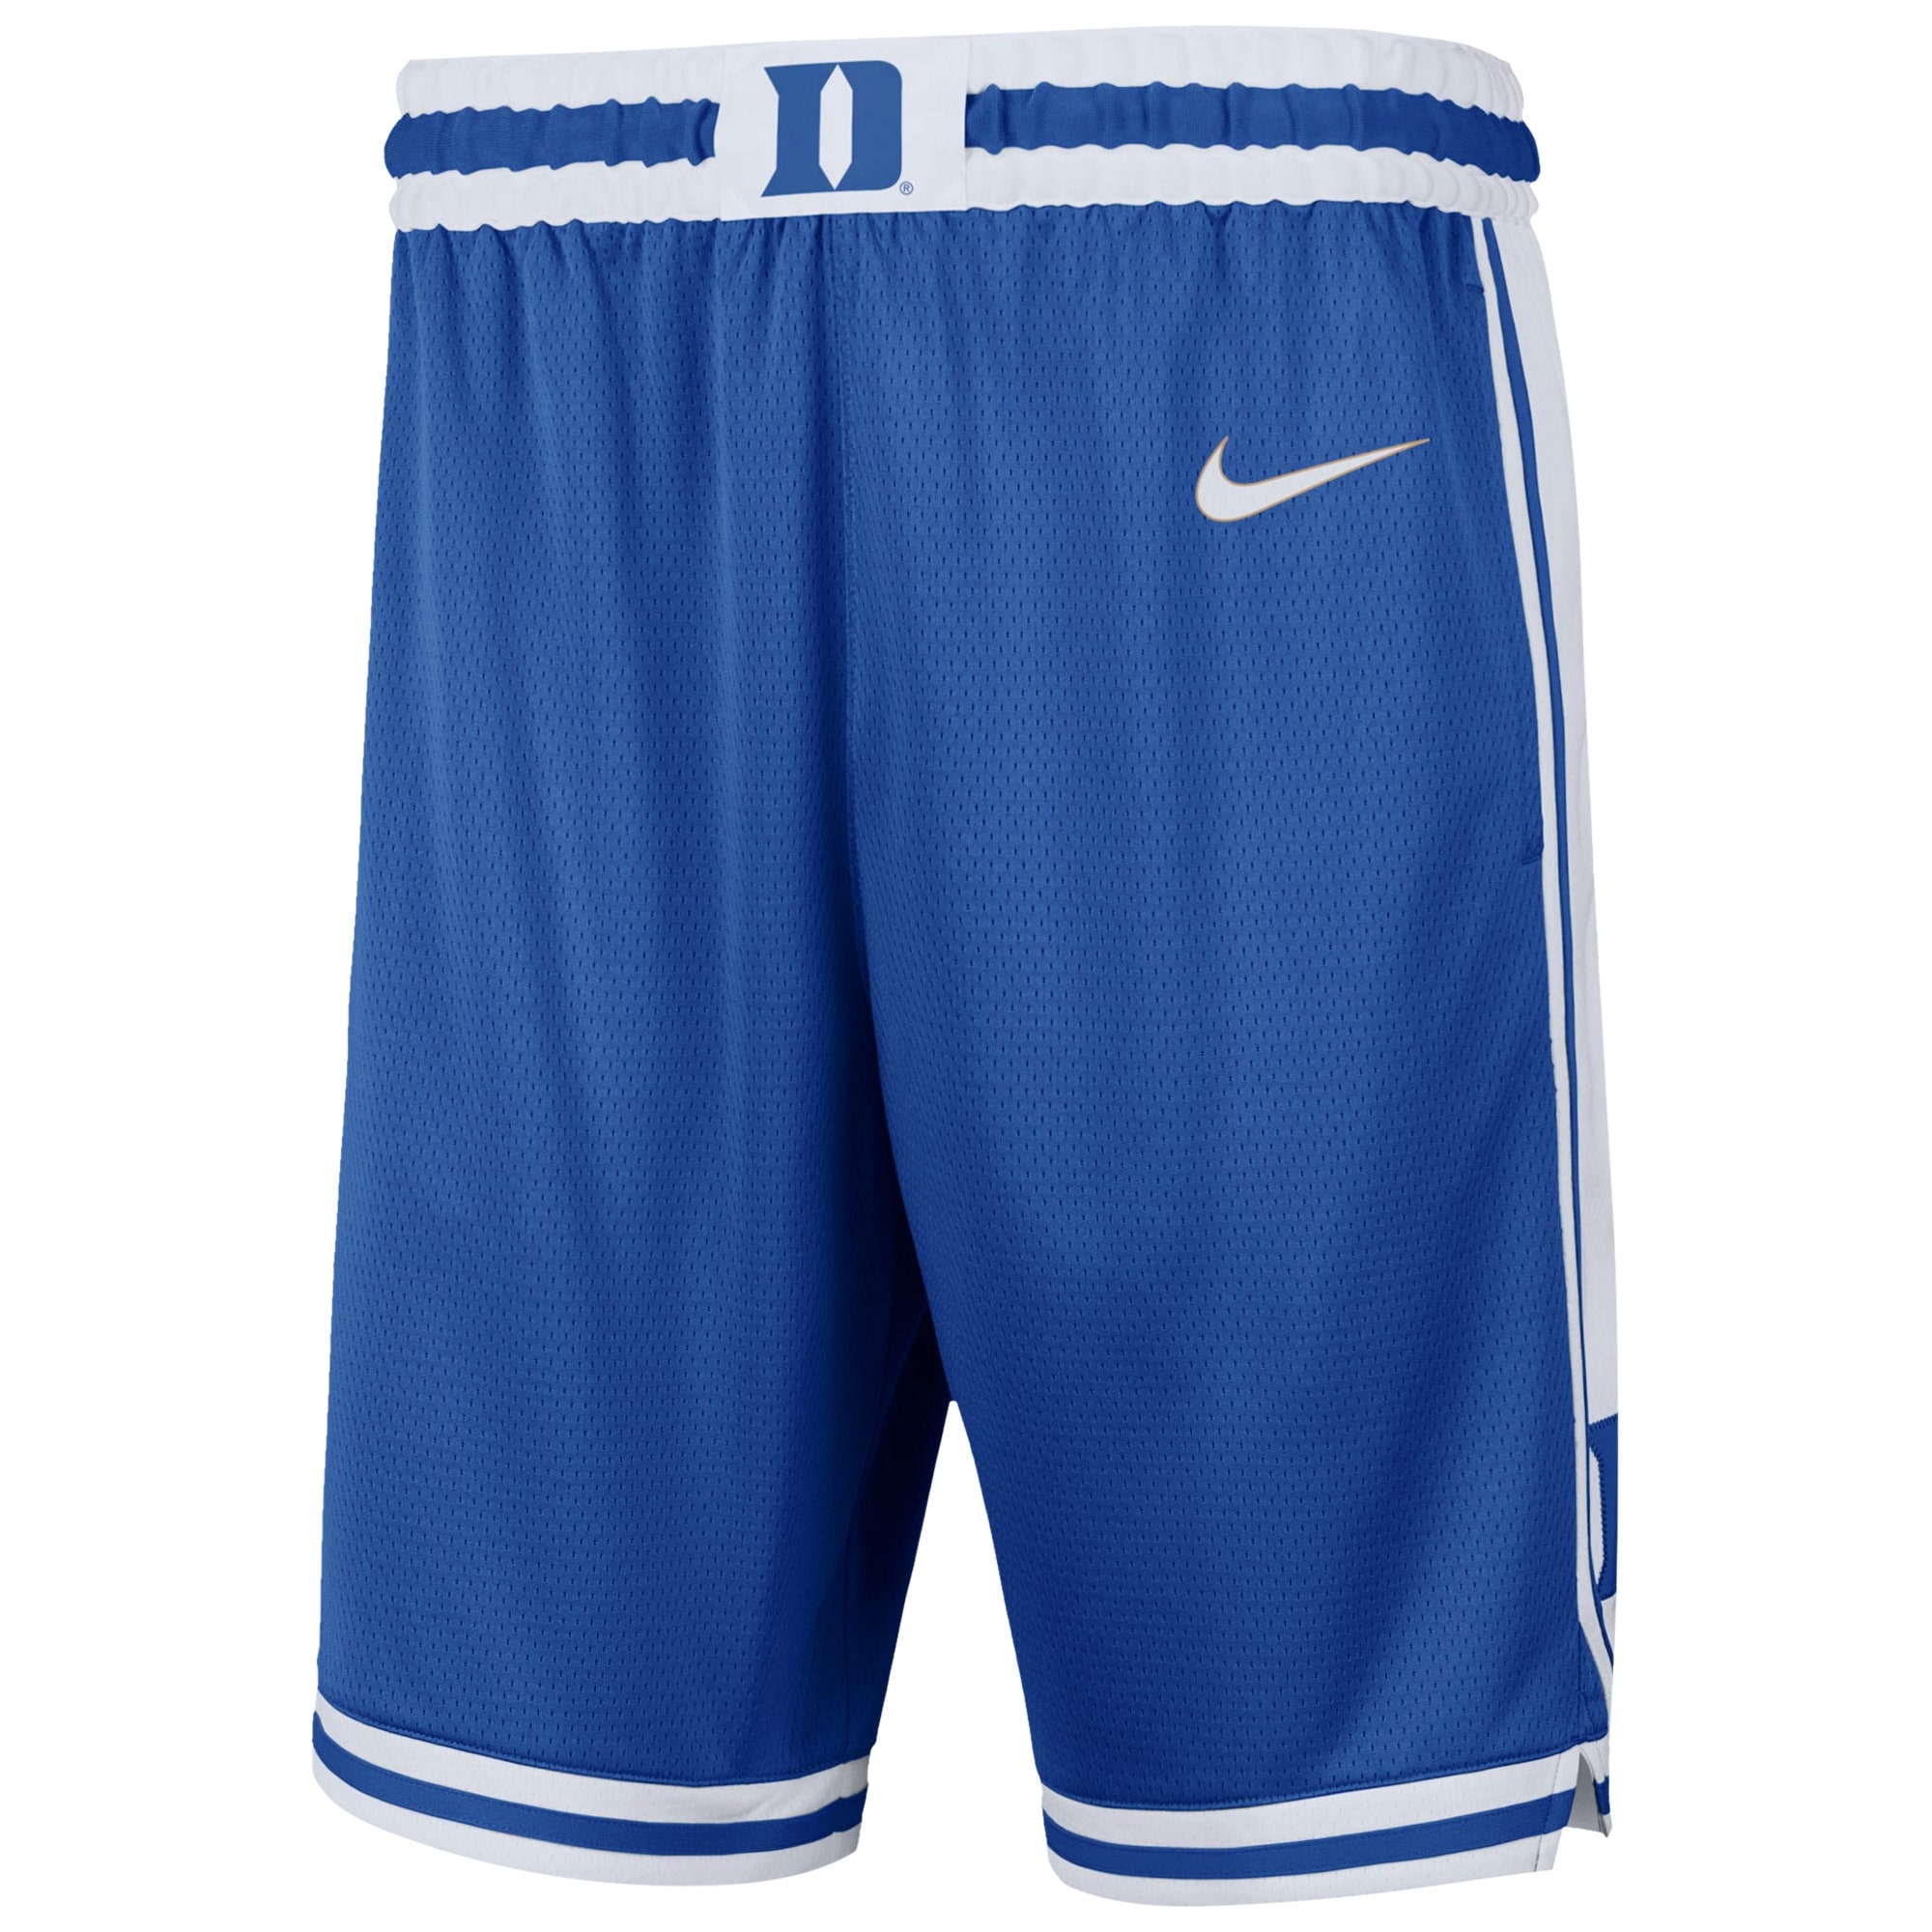 Men's Nike Royal Duke Blue Devils Limited Basketball Shorts - image 2 of 4